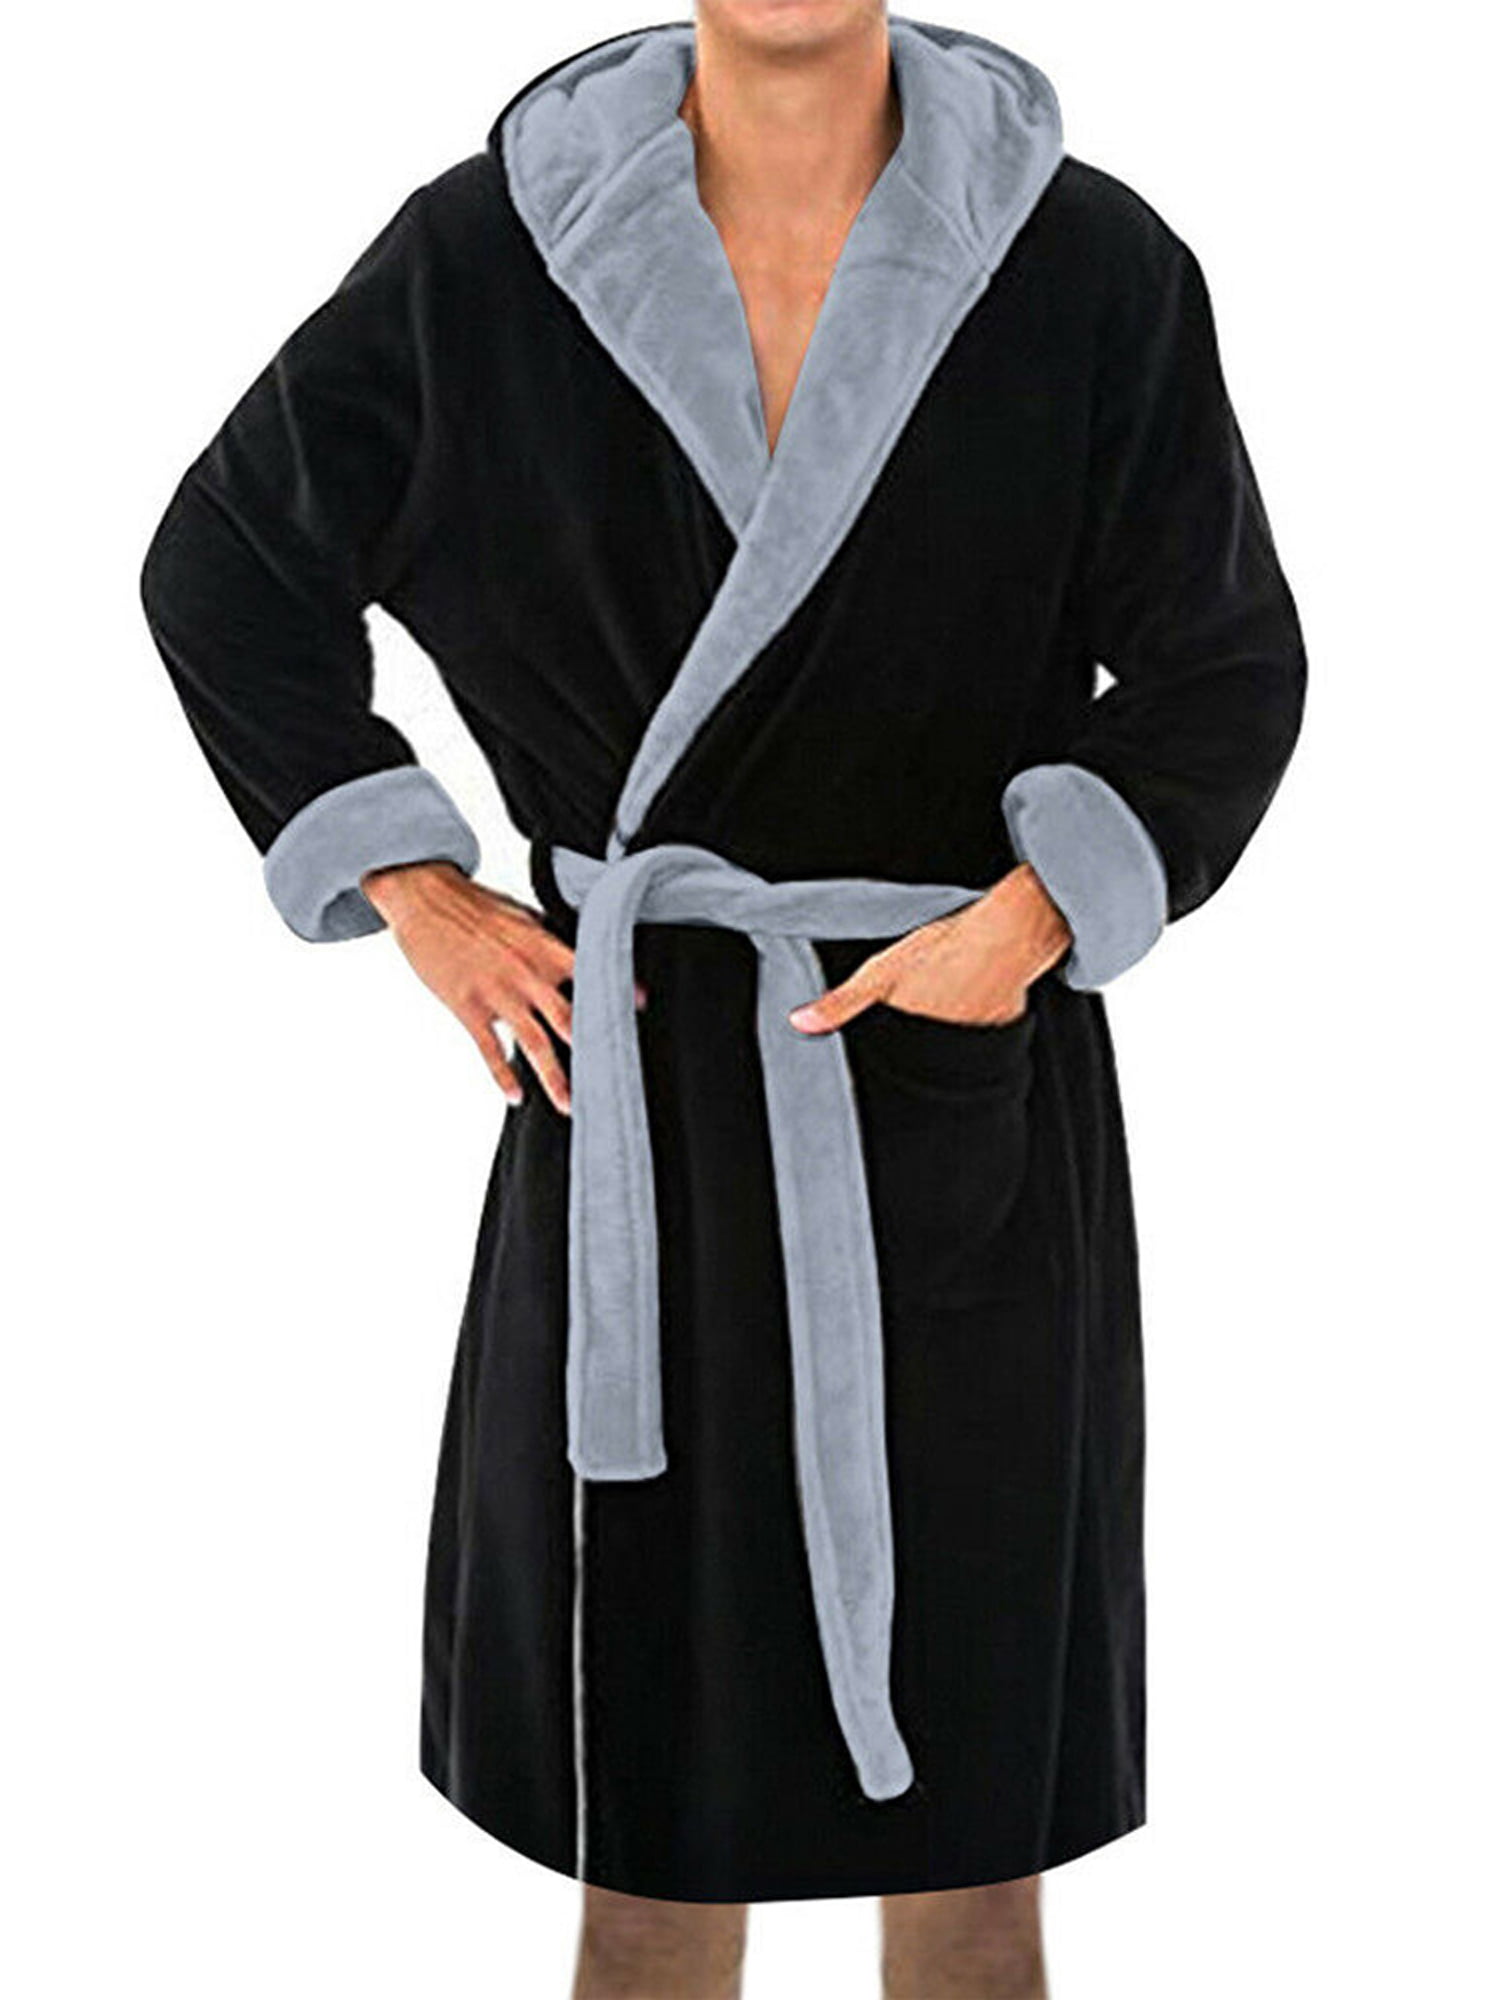 Men's Soft Housecoat Bath Robe Dressing Gown Gents Long Sleeve Sleepwear Robes 